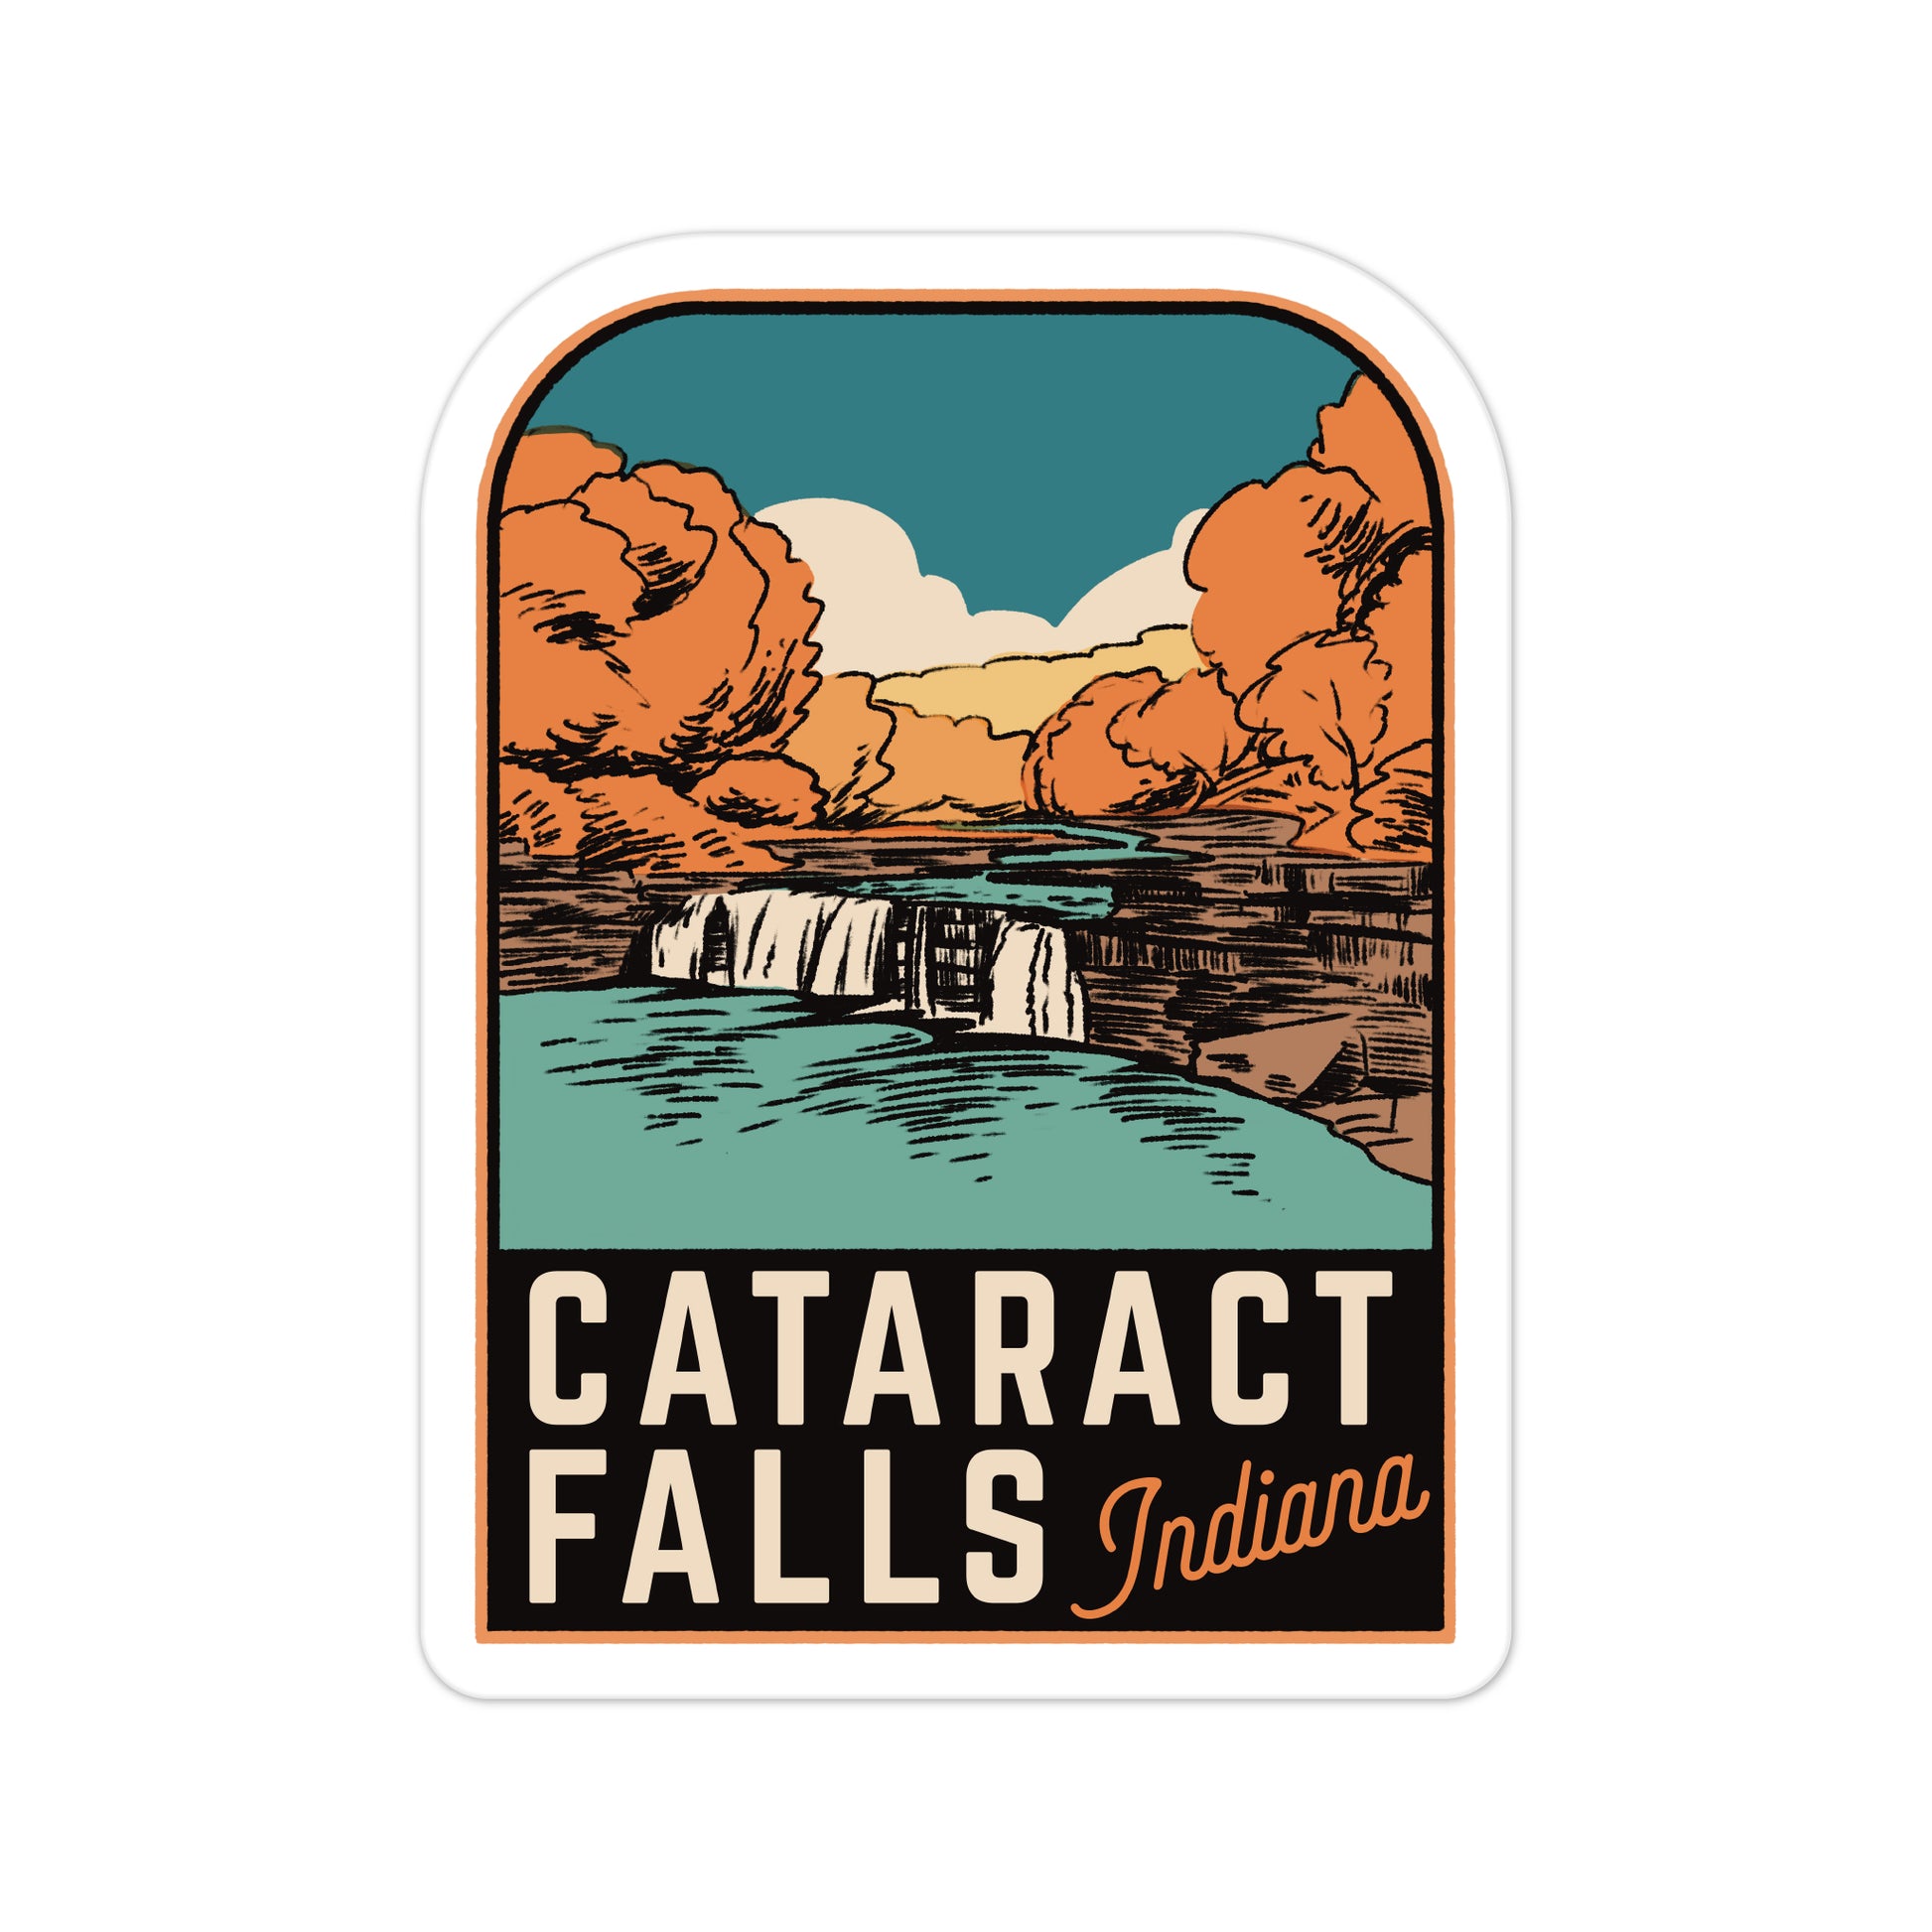 A sticker of Cataract Falls Indiana